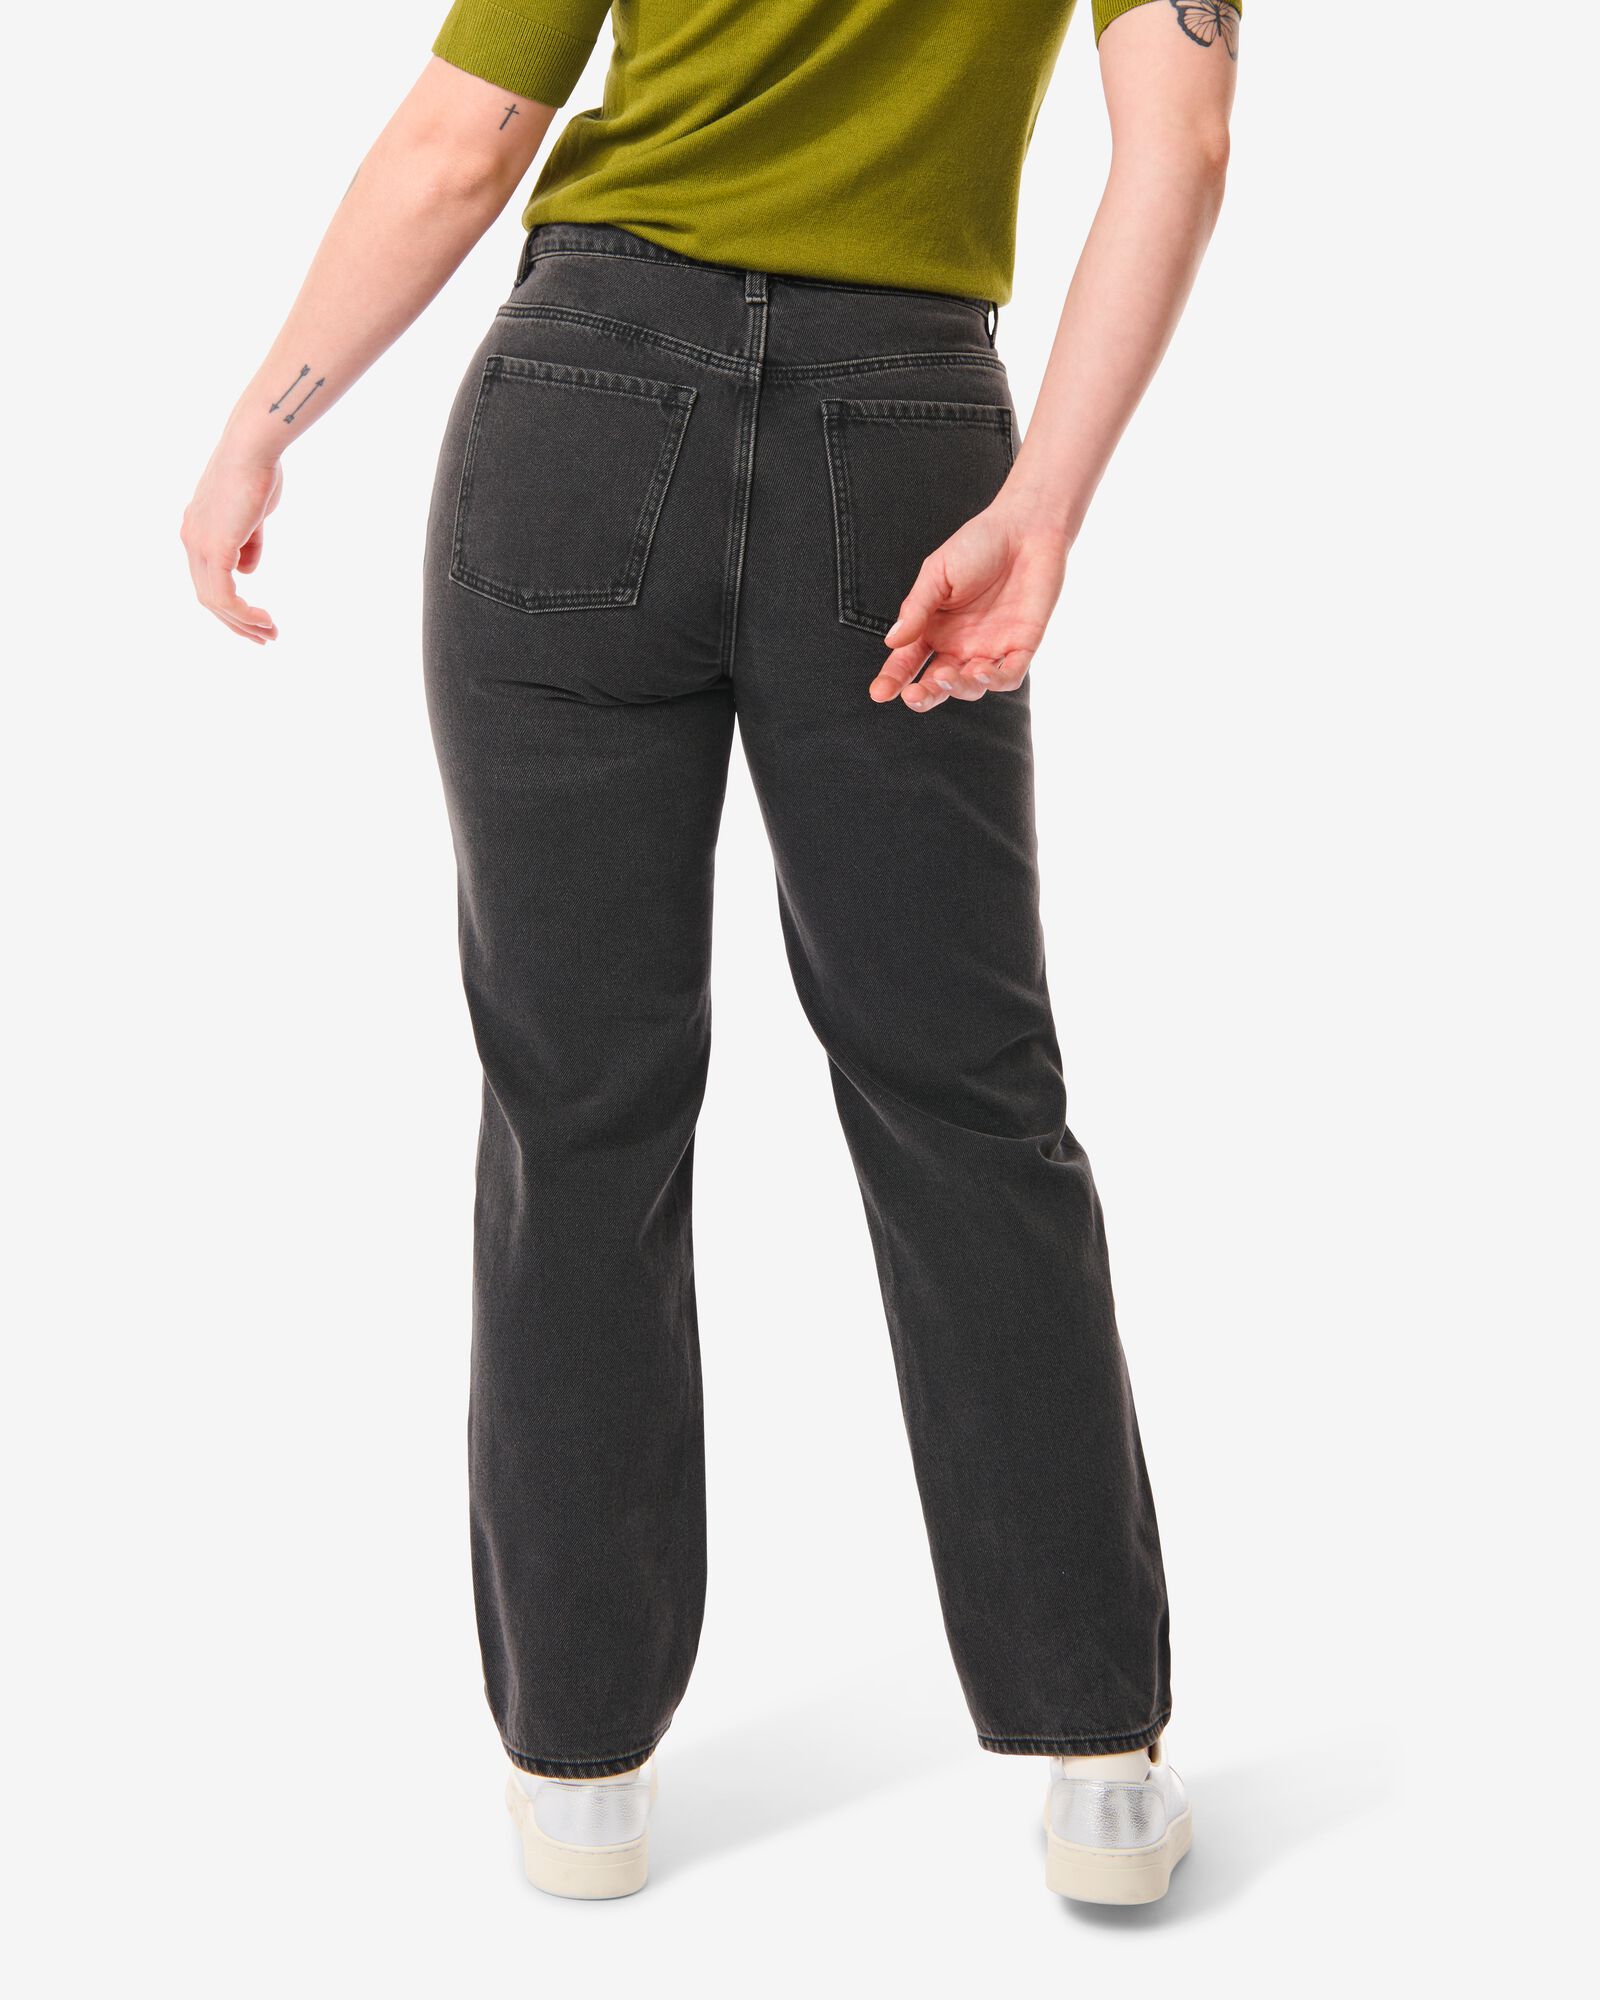 Damen-Jeans, Straight Fit dunkelgrau 46 - 36319986 - HEMA